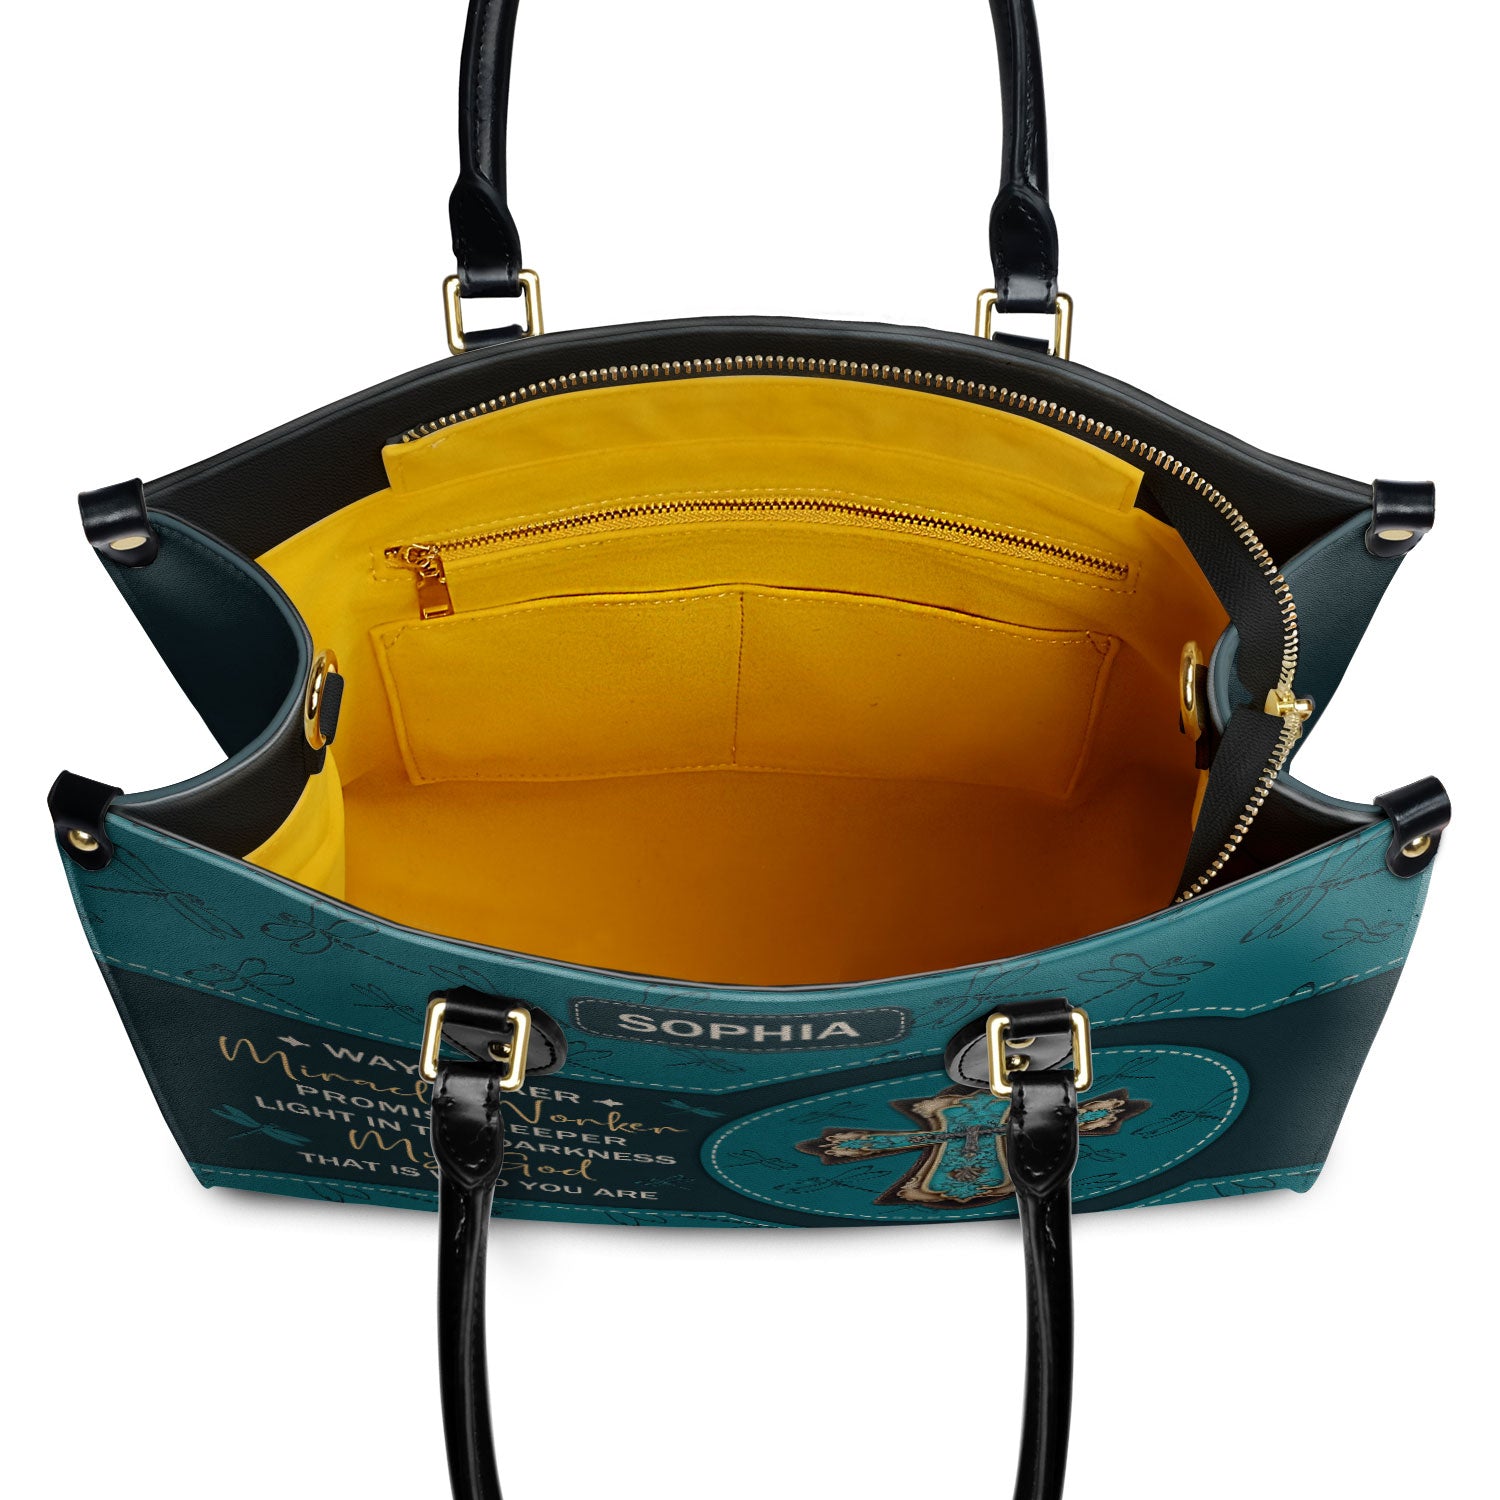 The Luxury Handbag — luxurypro